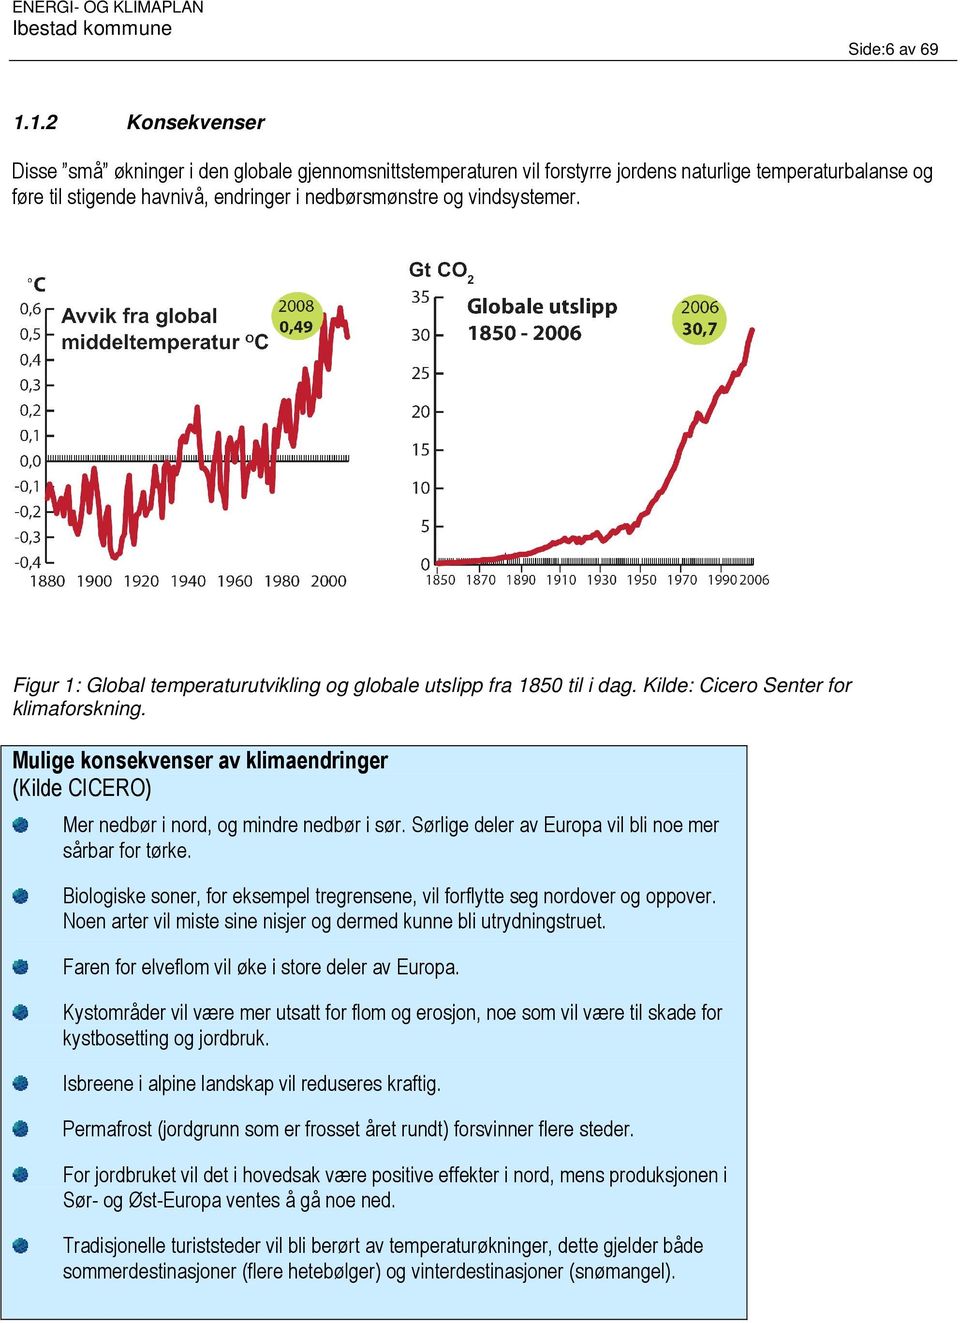 Figur 1: Global temperaturutvikling og globale utslipp fra 1850 til i dag. Kilde: Cicero Senter for klimaforskning.